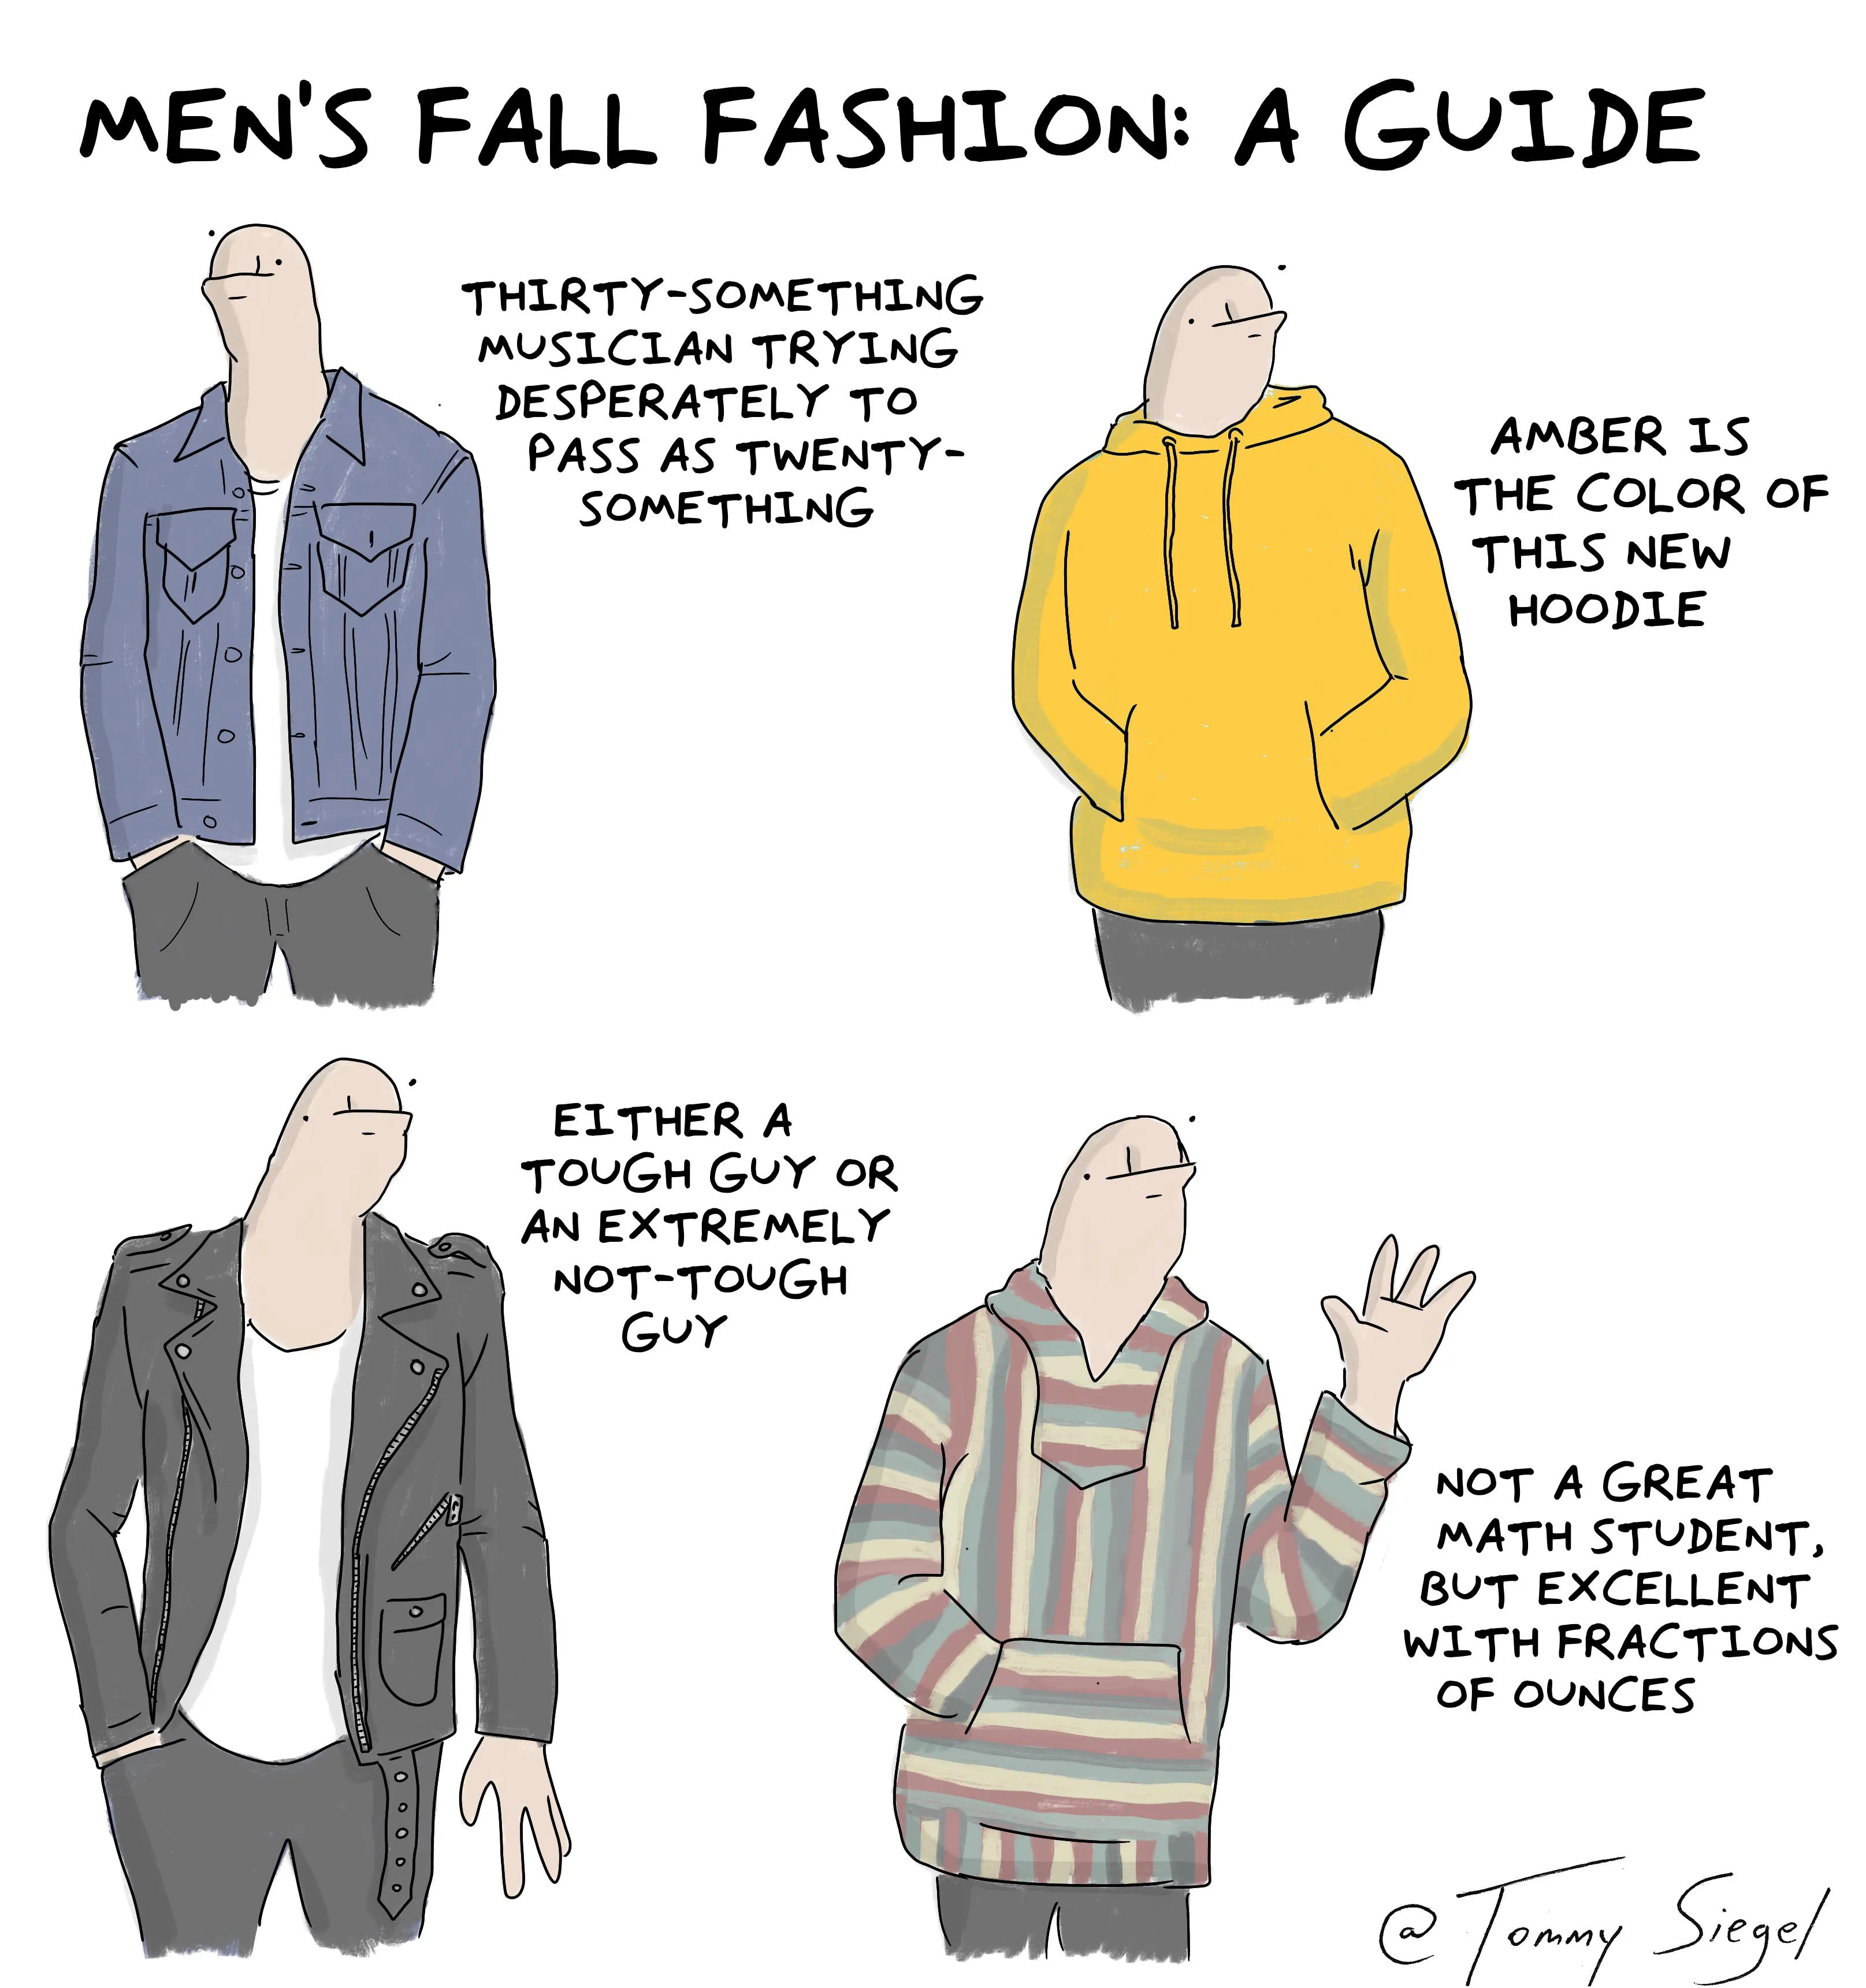 Men's fall fashion: a guide